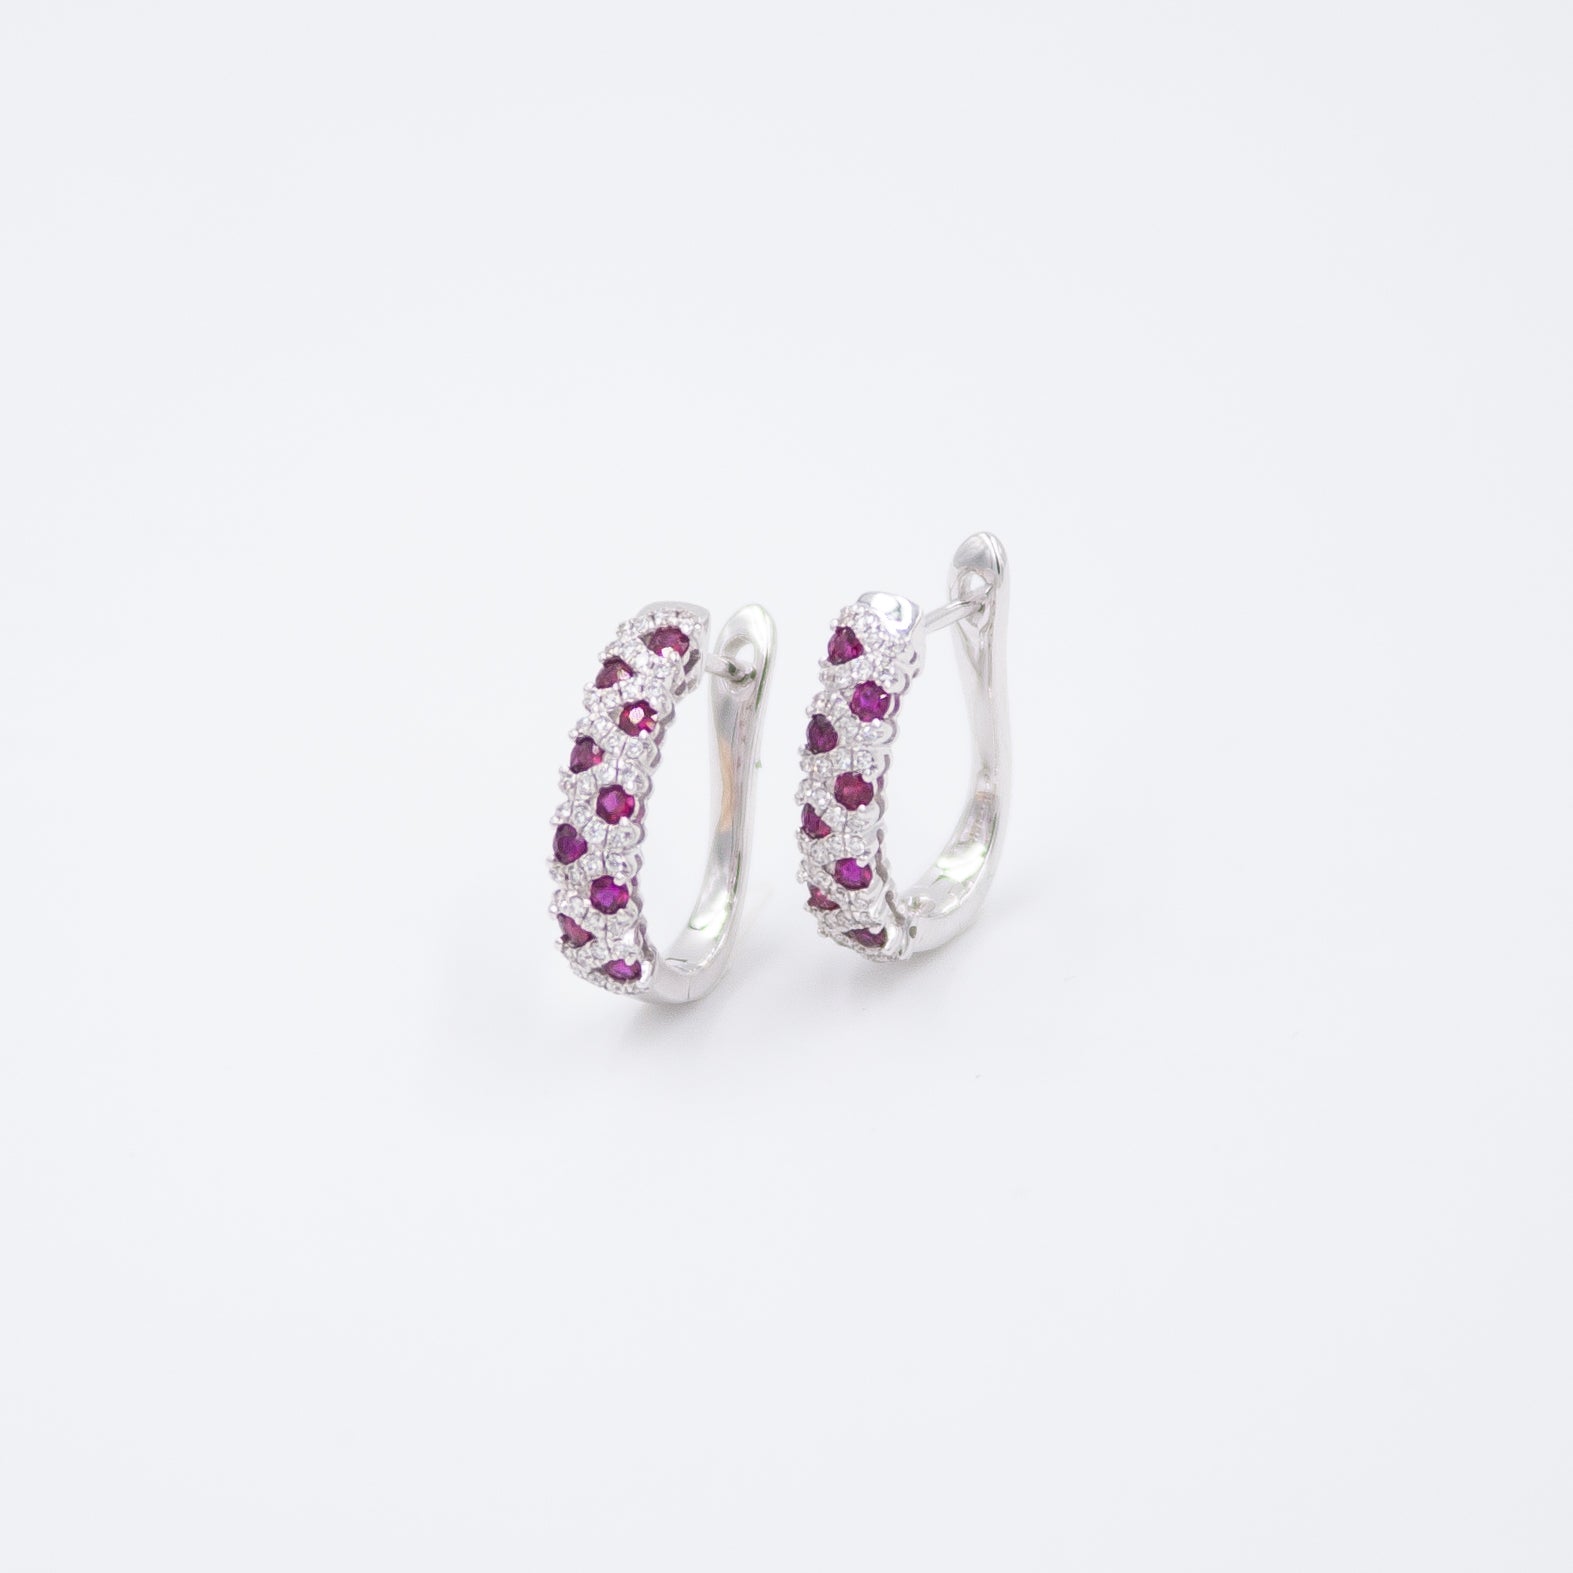 Stripe earrings with rubies and diamonds